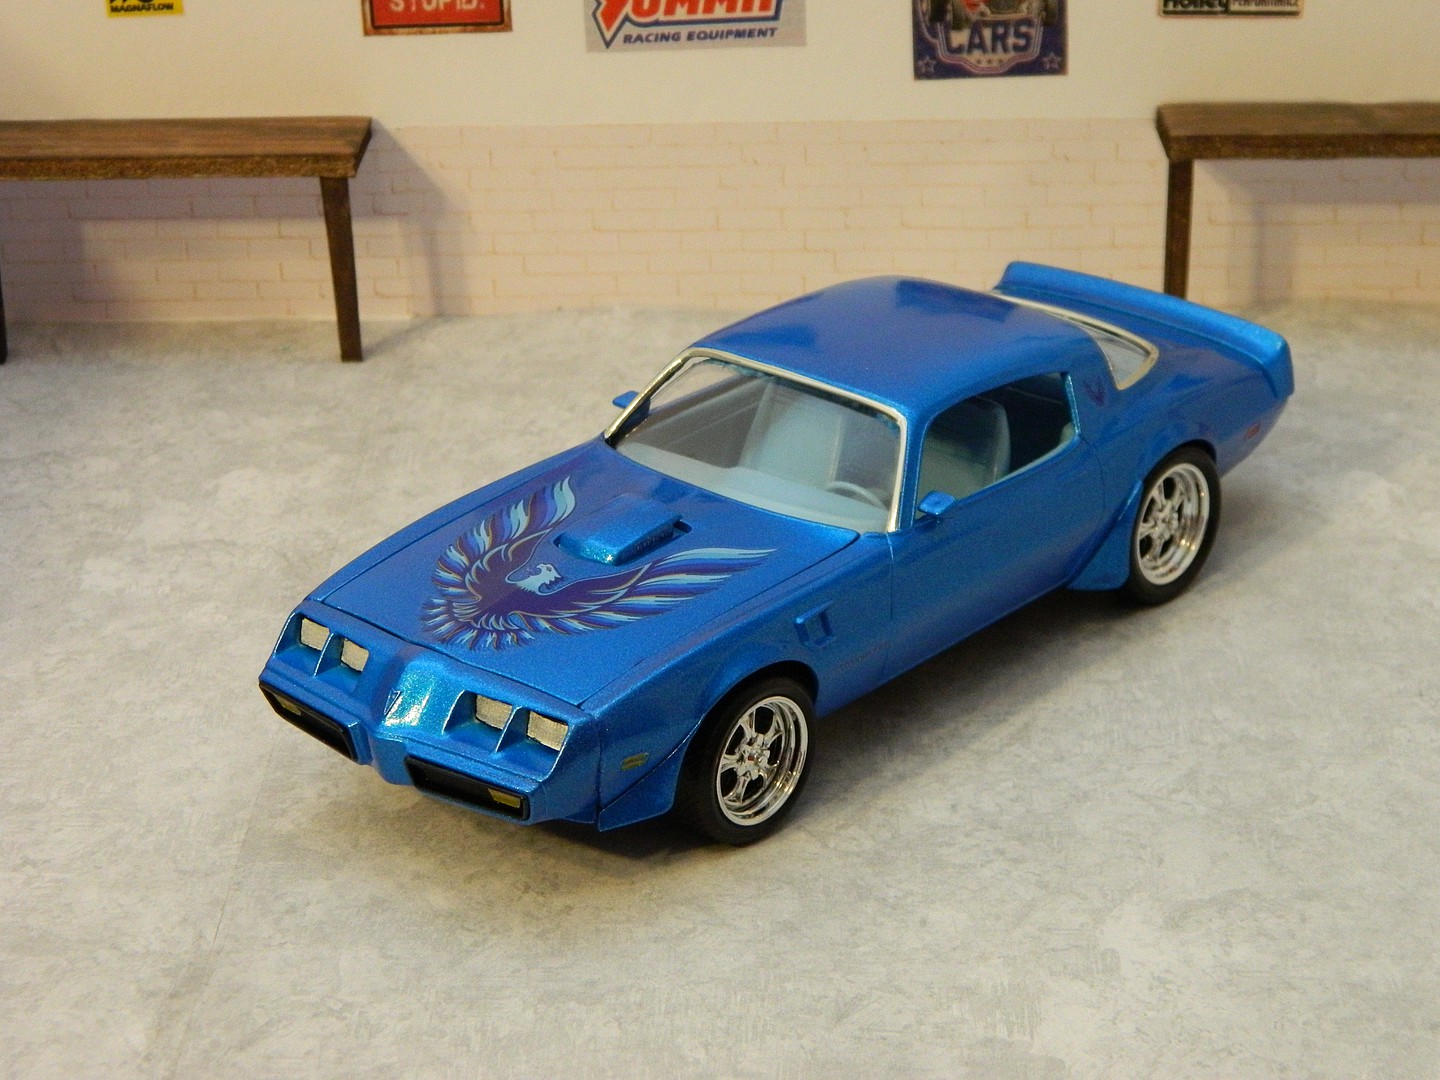 1969 pontiac firebird model car